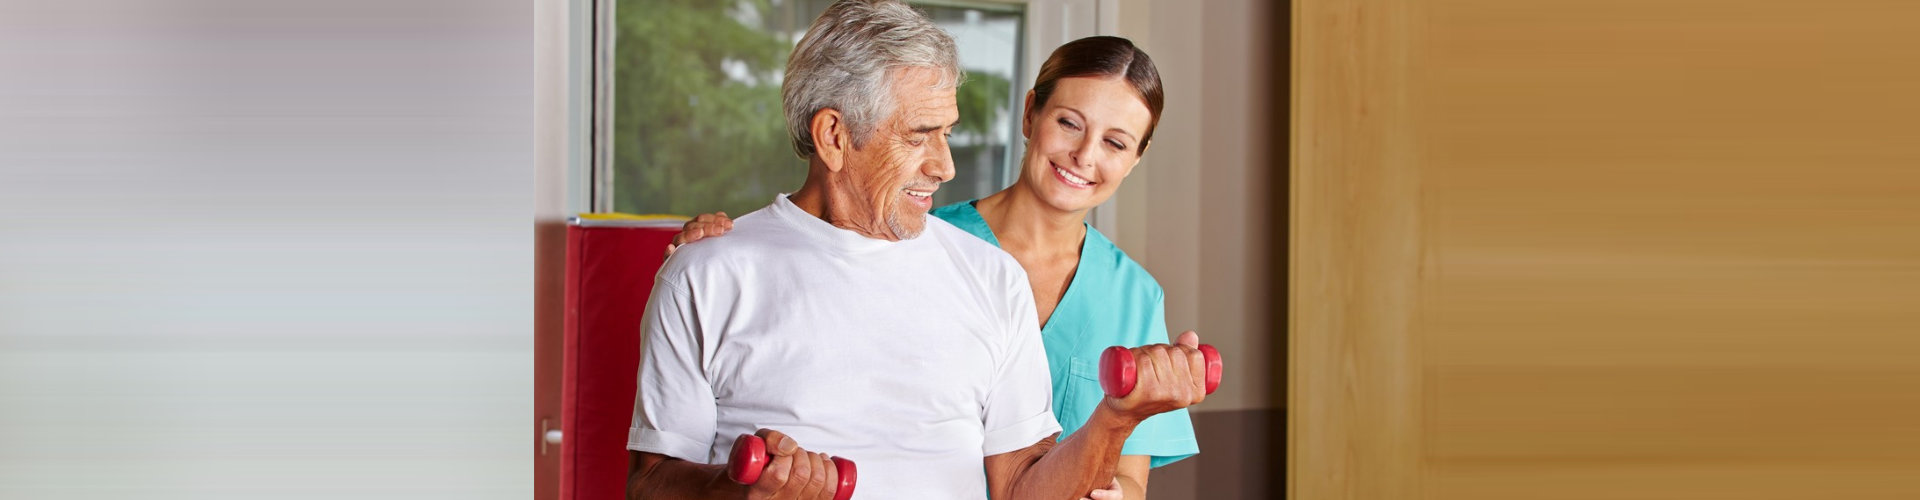 an elderly man exercising with a female nurse